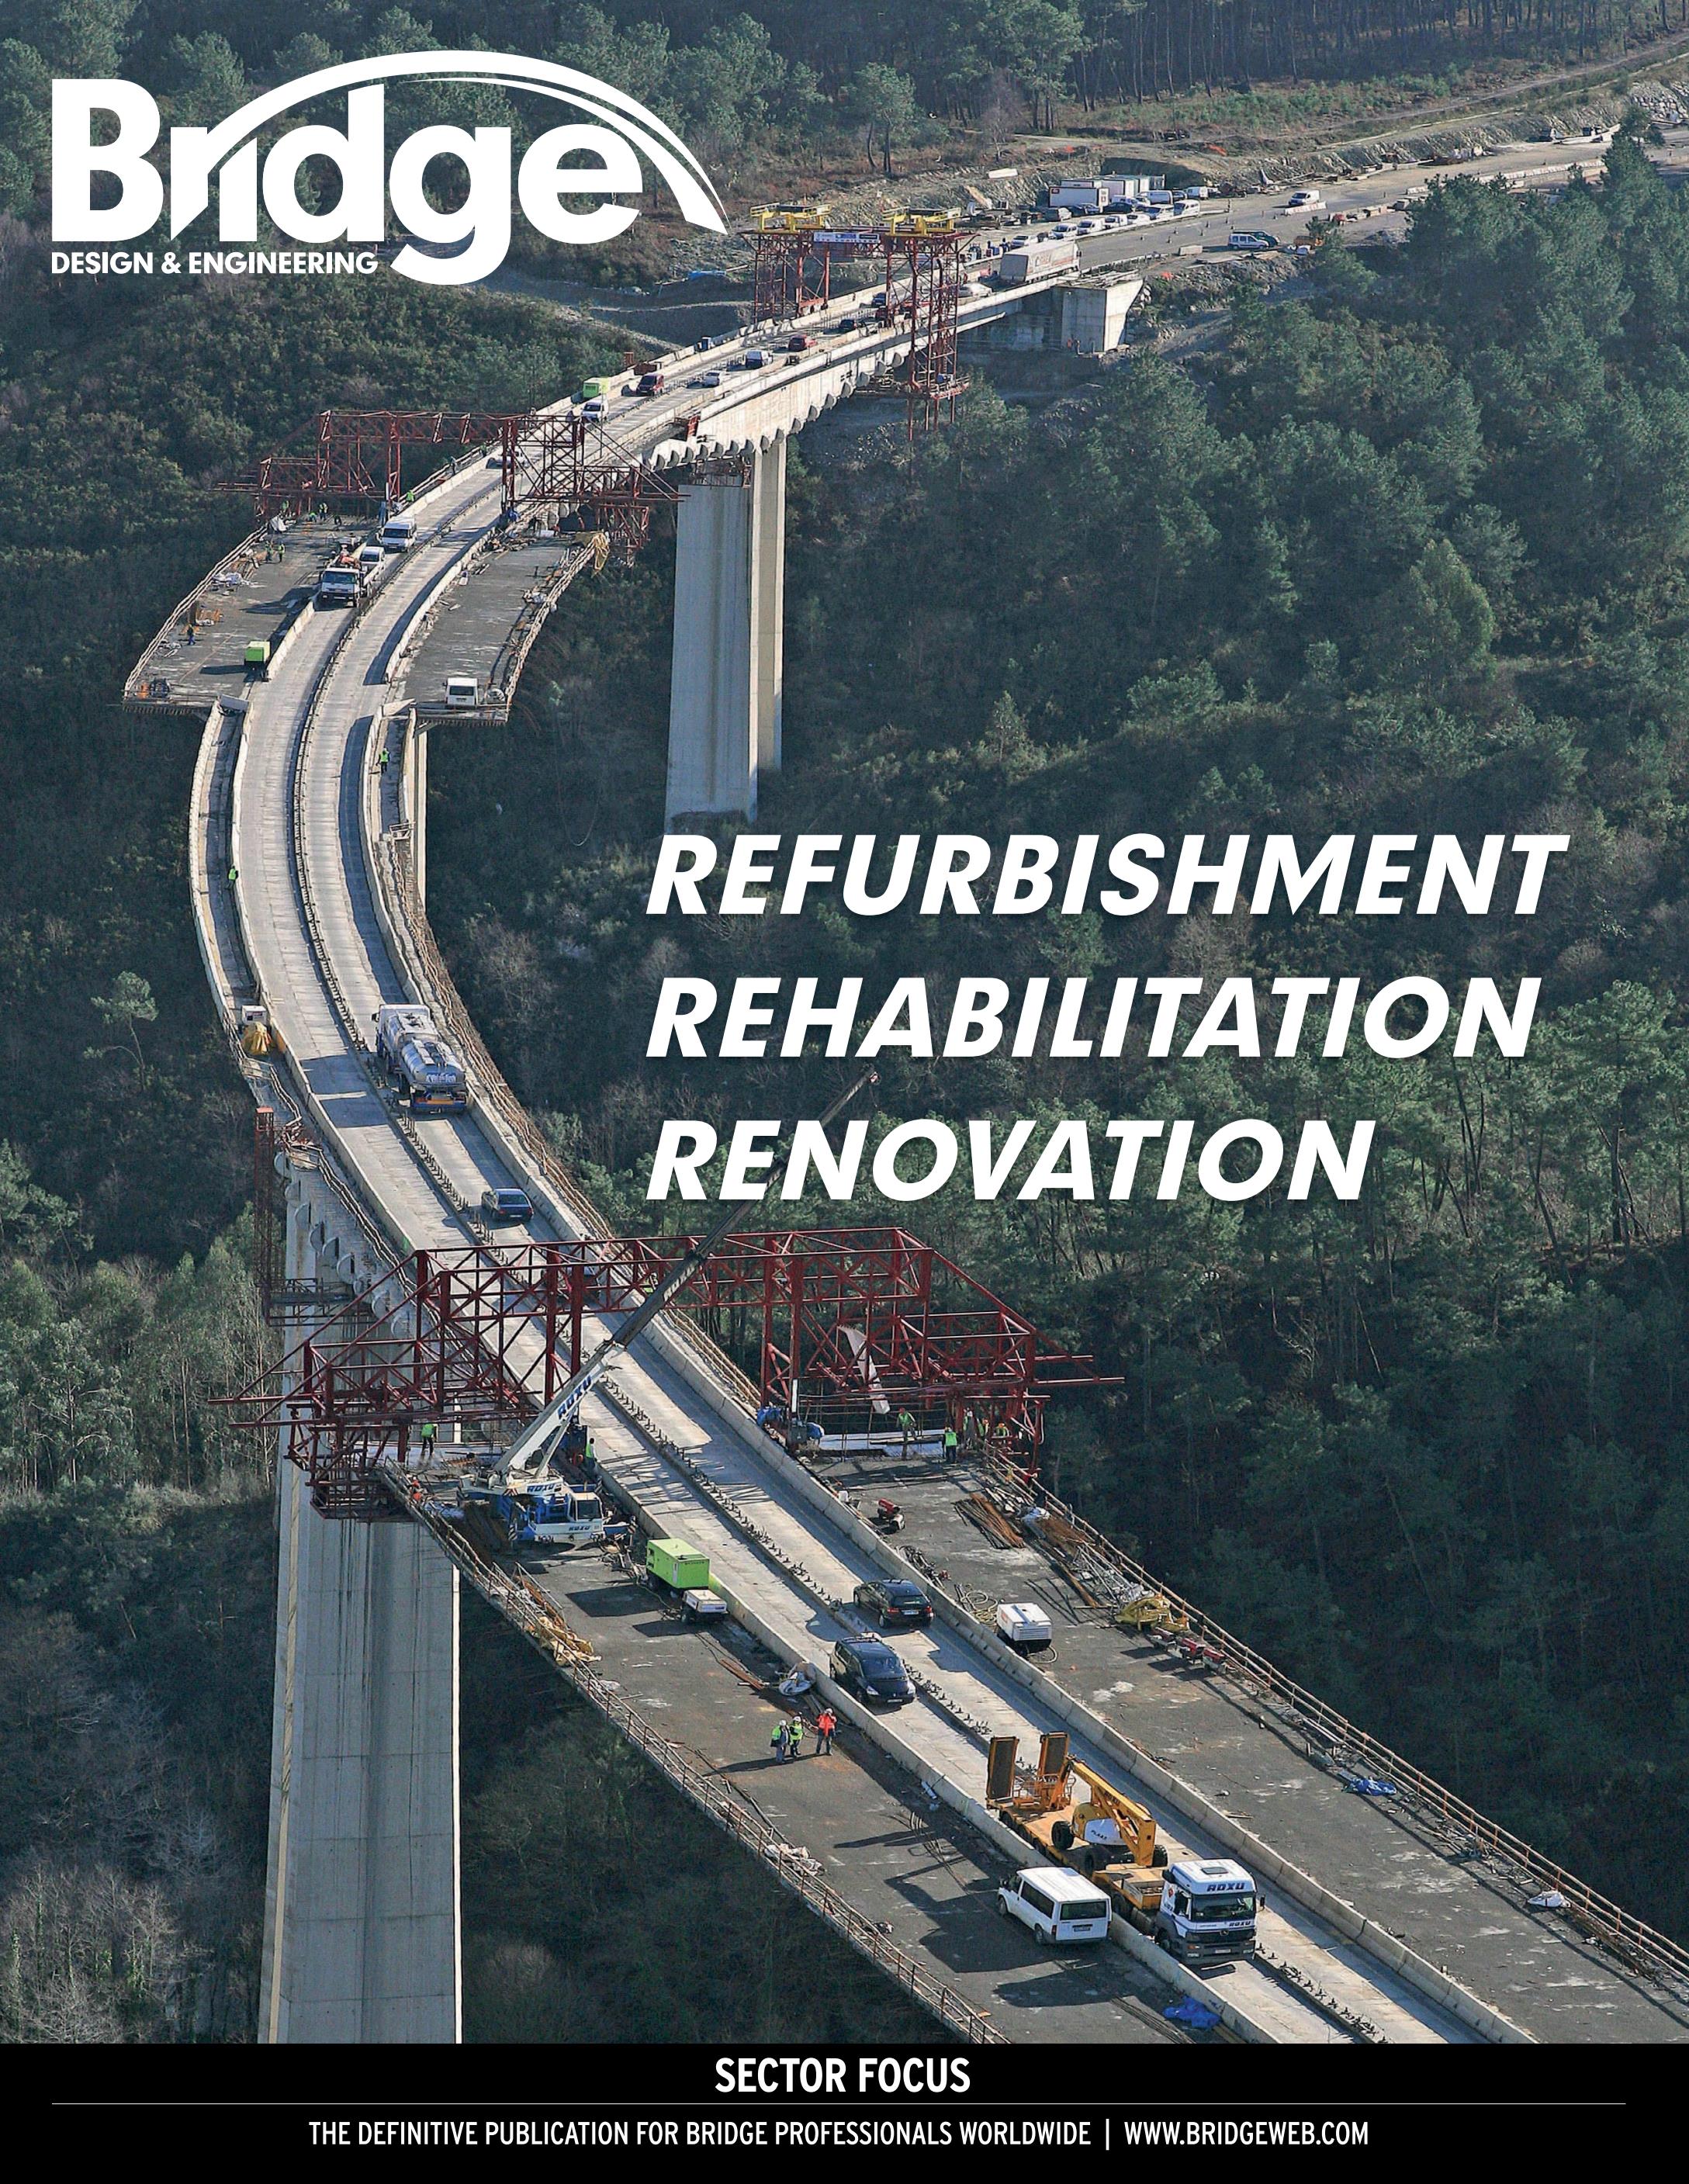 Refurbishment, rehabilitation and renovation